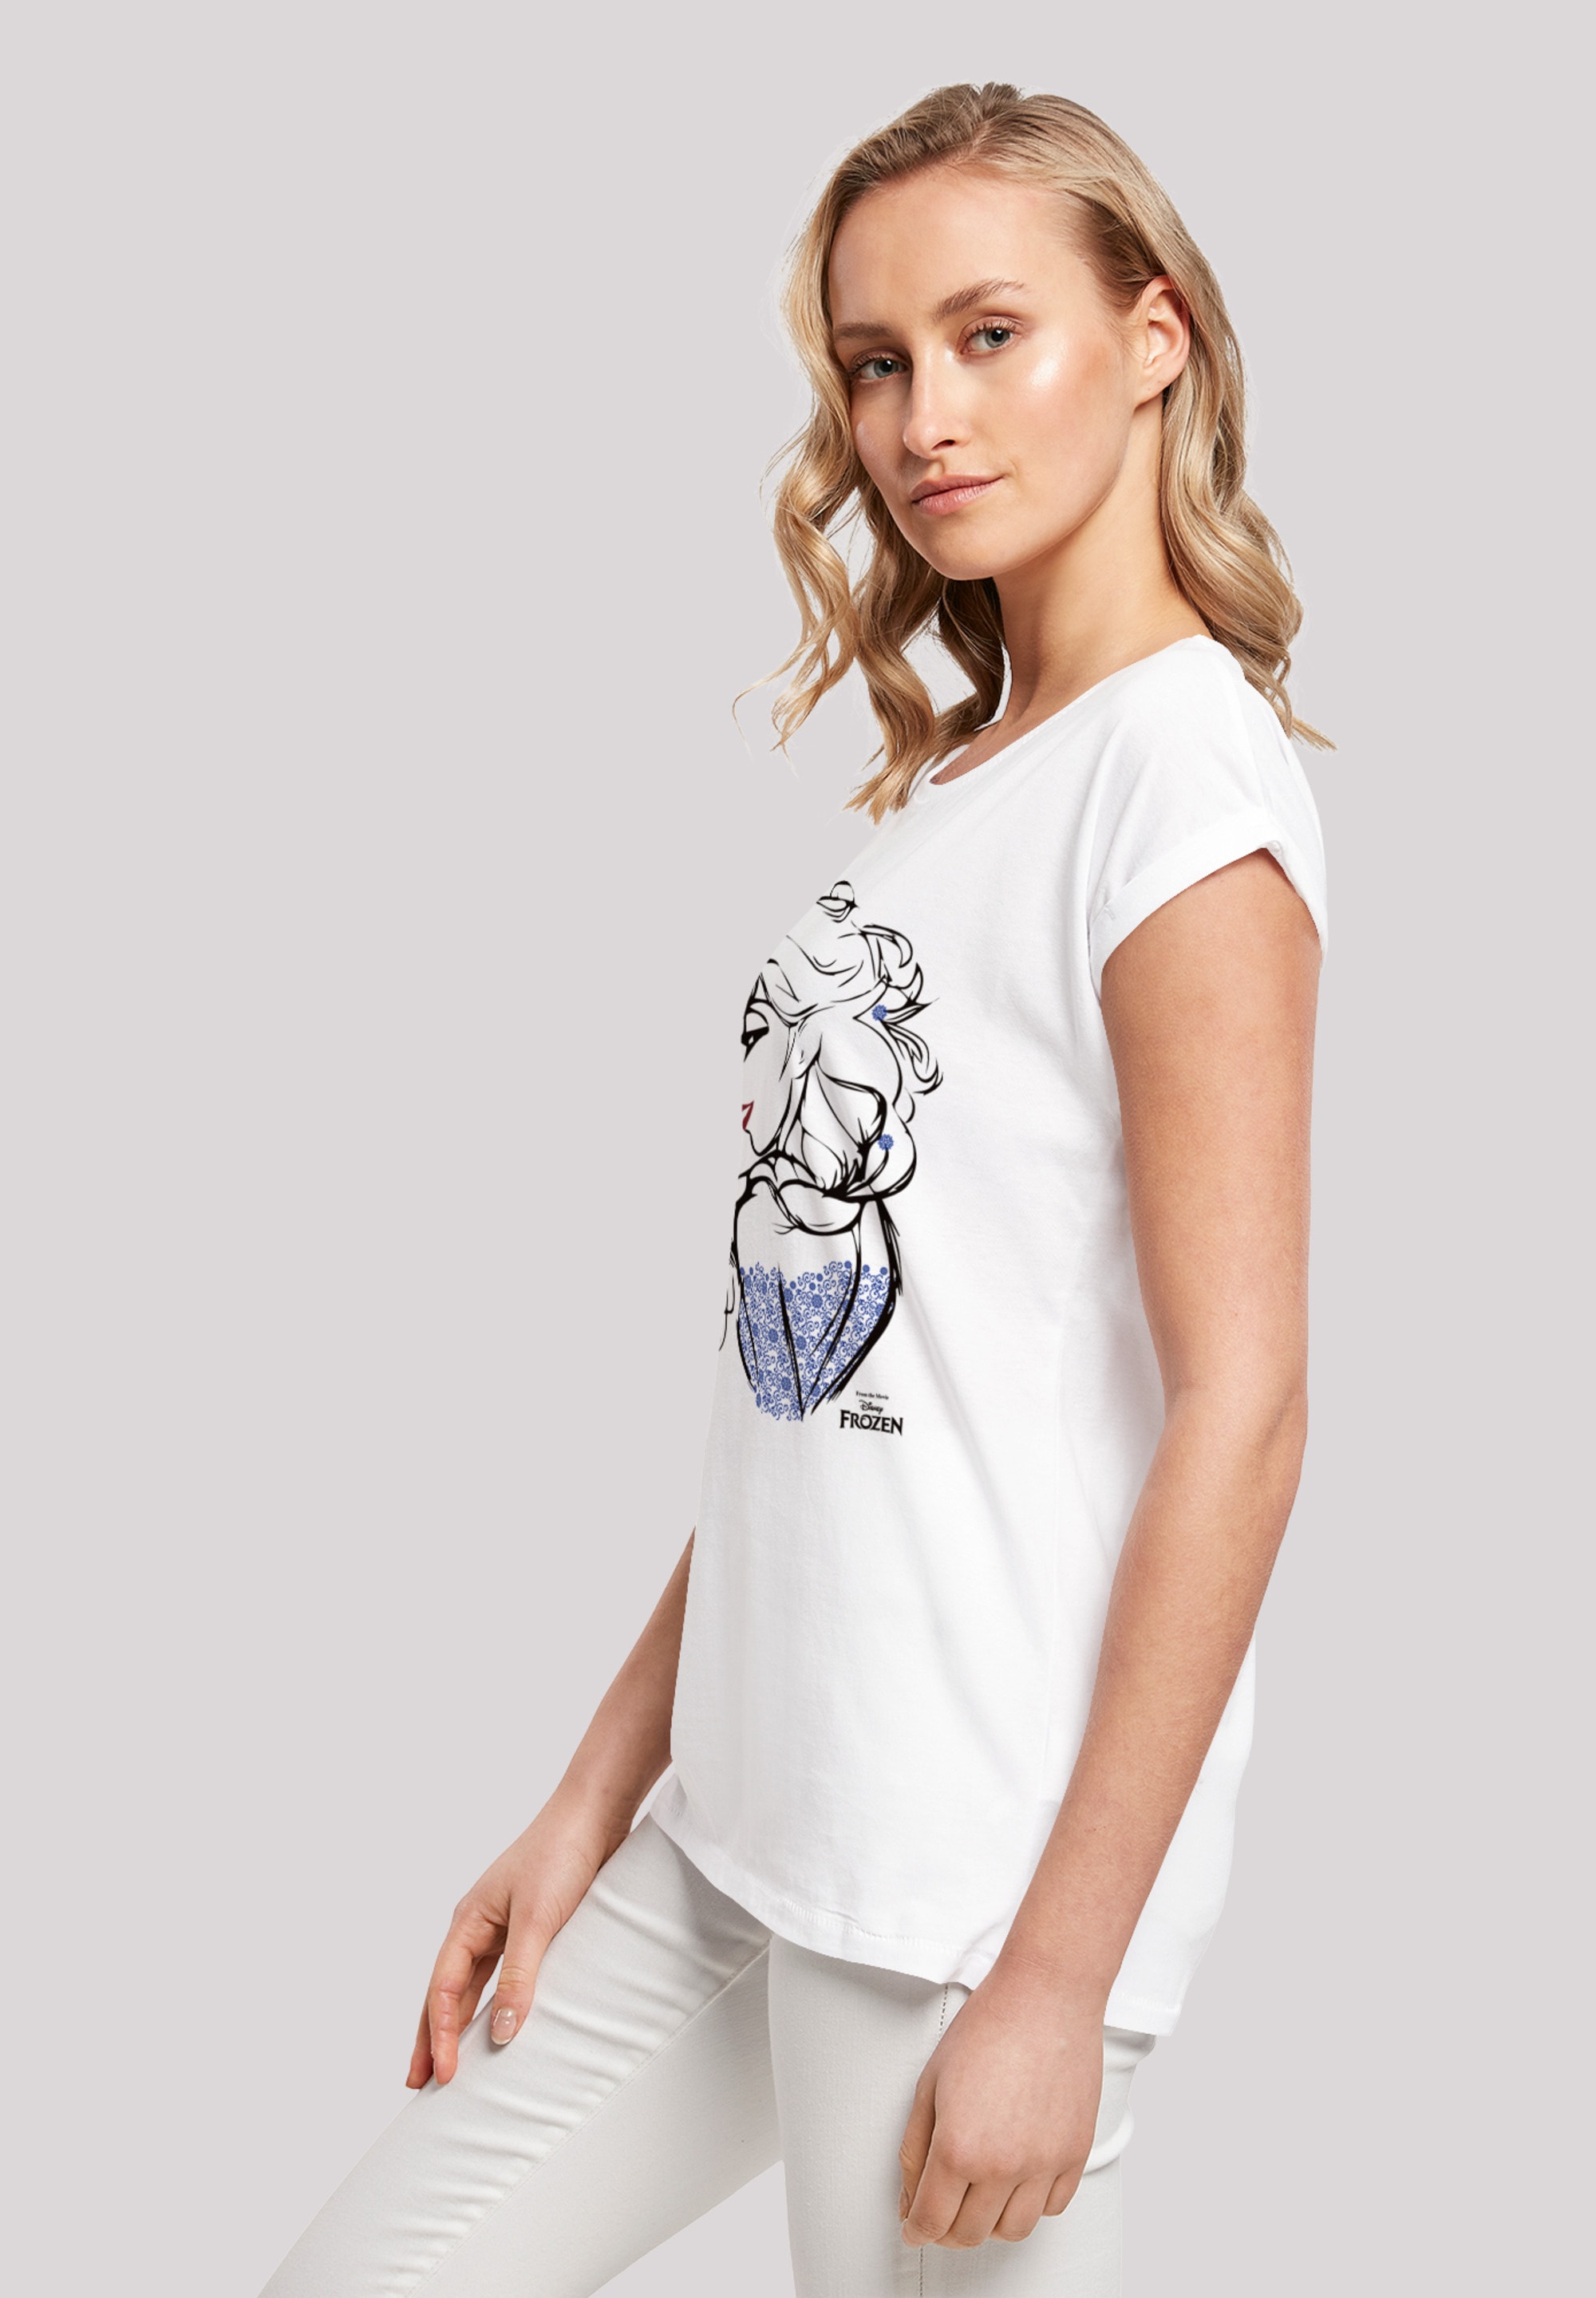 »Frozen Mono«, Sketch T-Shirt Print F4NT4STIC bestellen Elsa